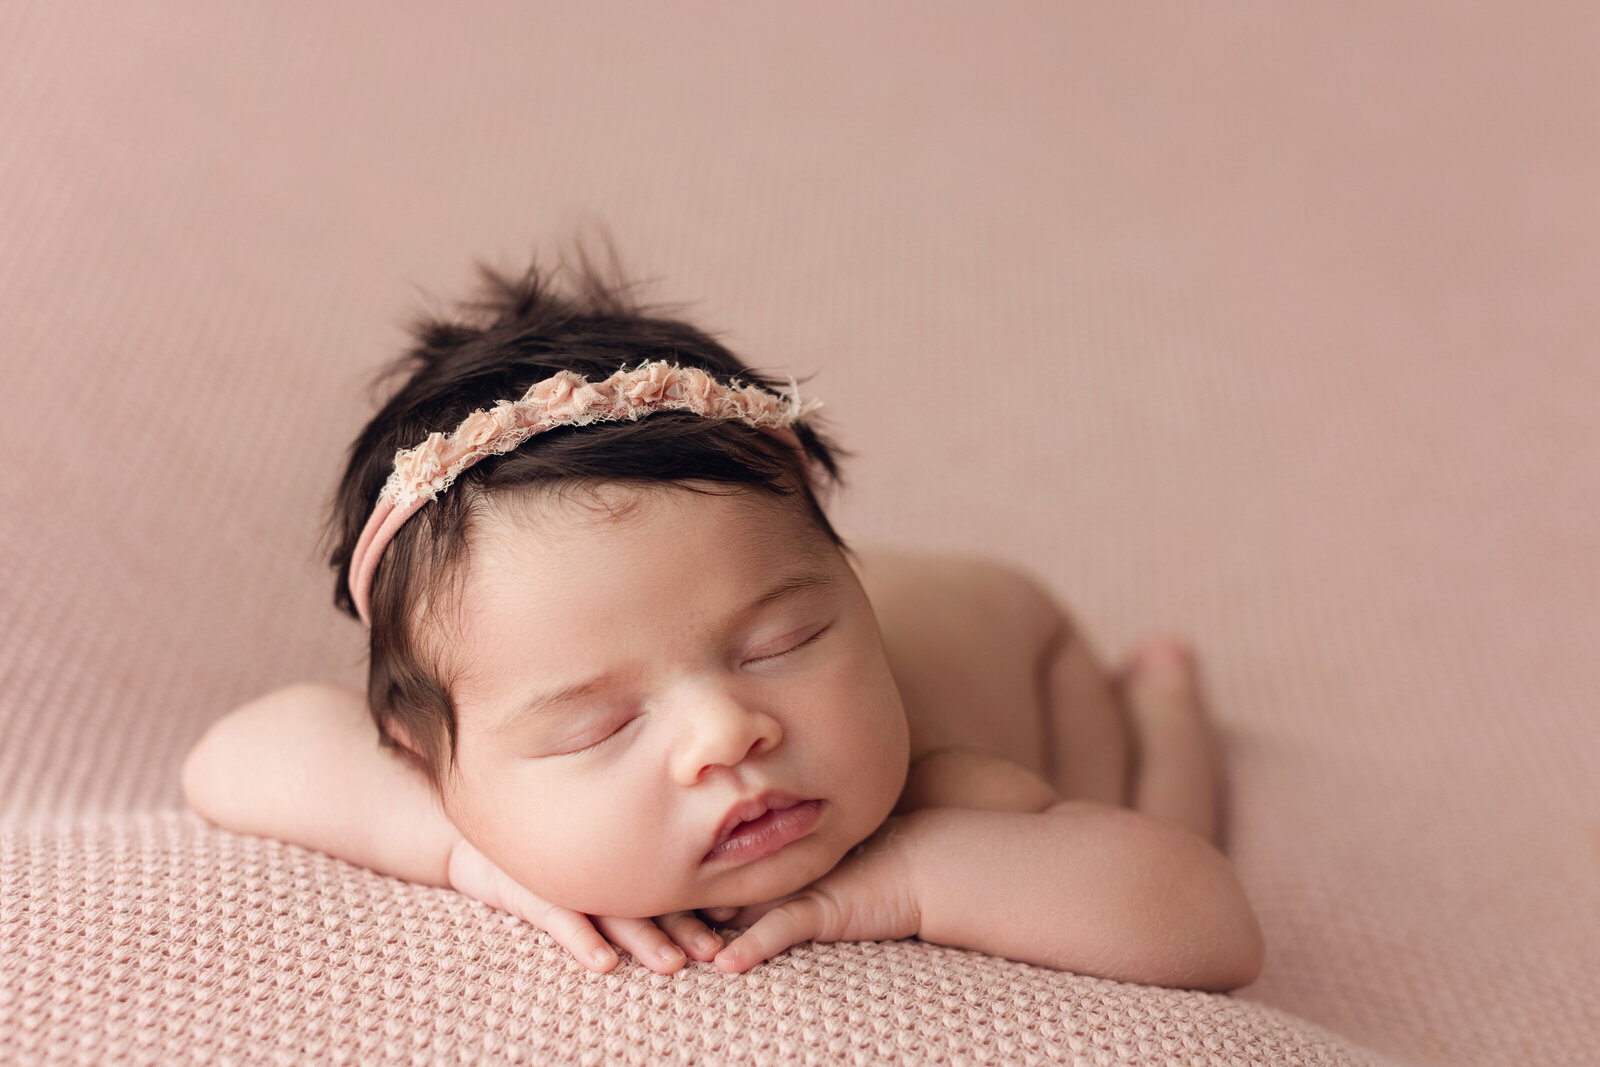 newborn baby girl on pink blanket